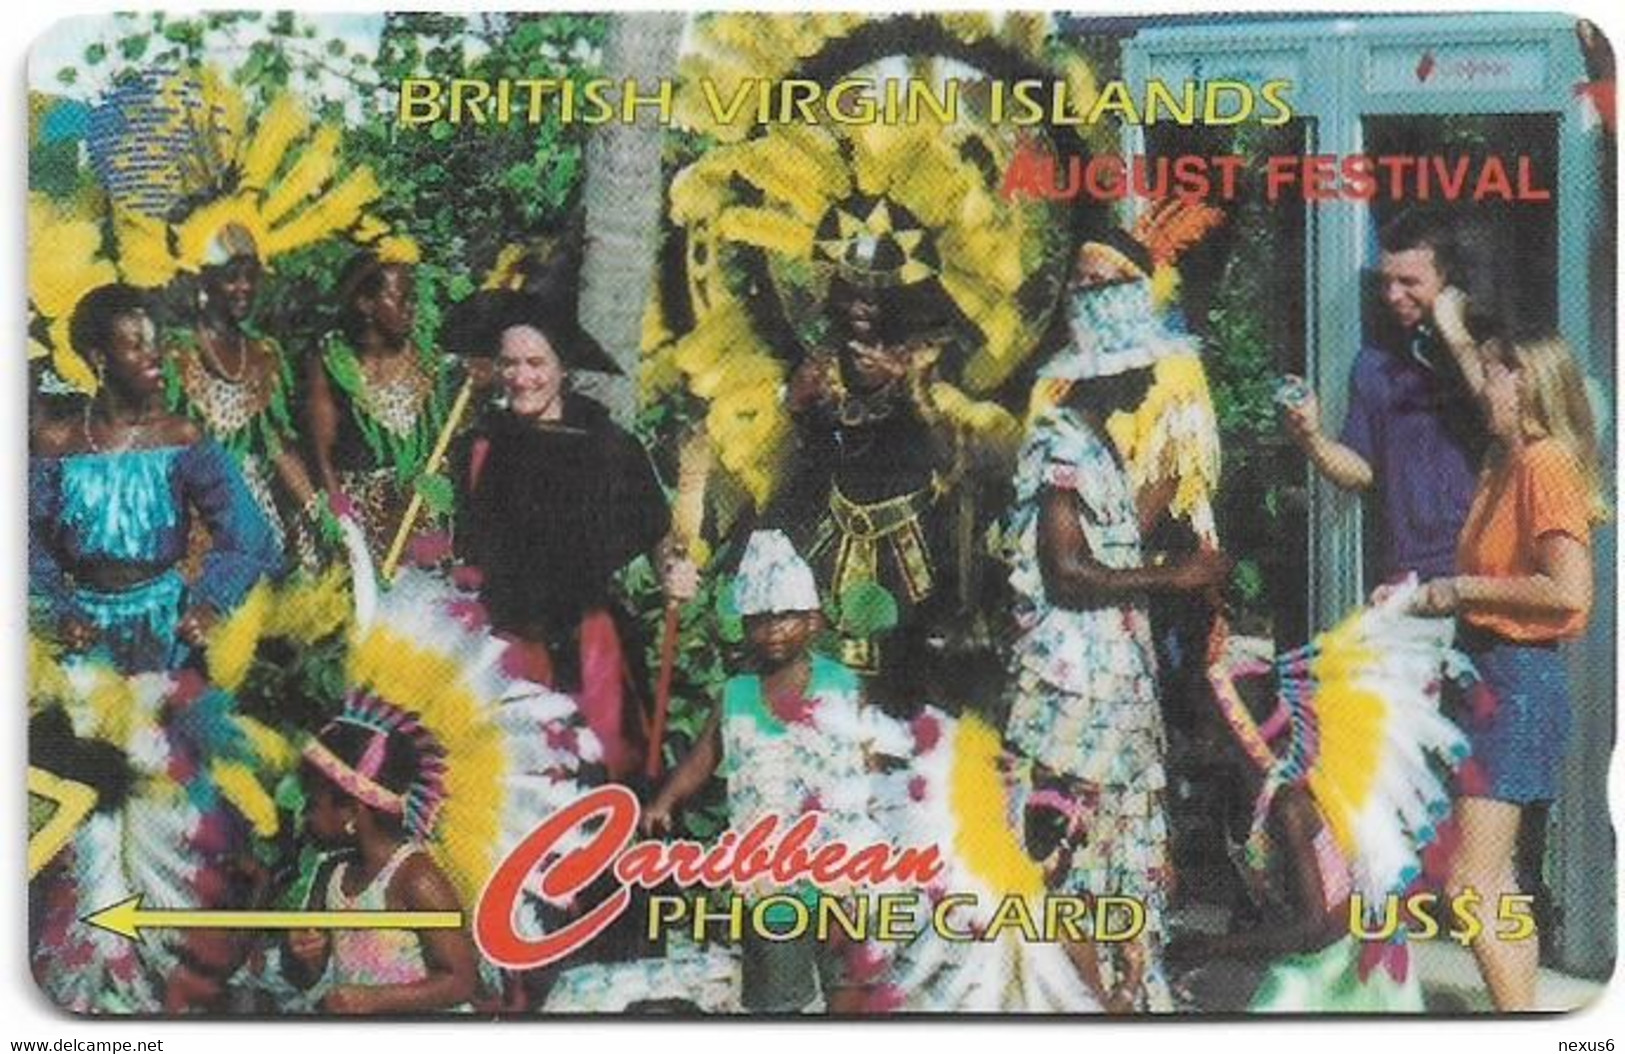 British Virgin Islands - C&W (GPT) - August Festival, 143CBVF, 1997, 17.000ex, Used - Virgin Islands